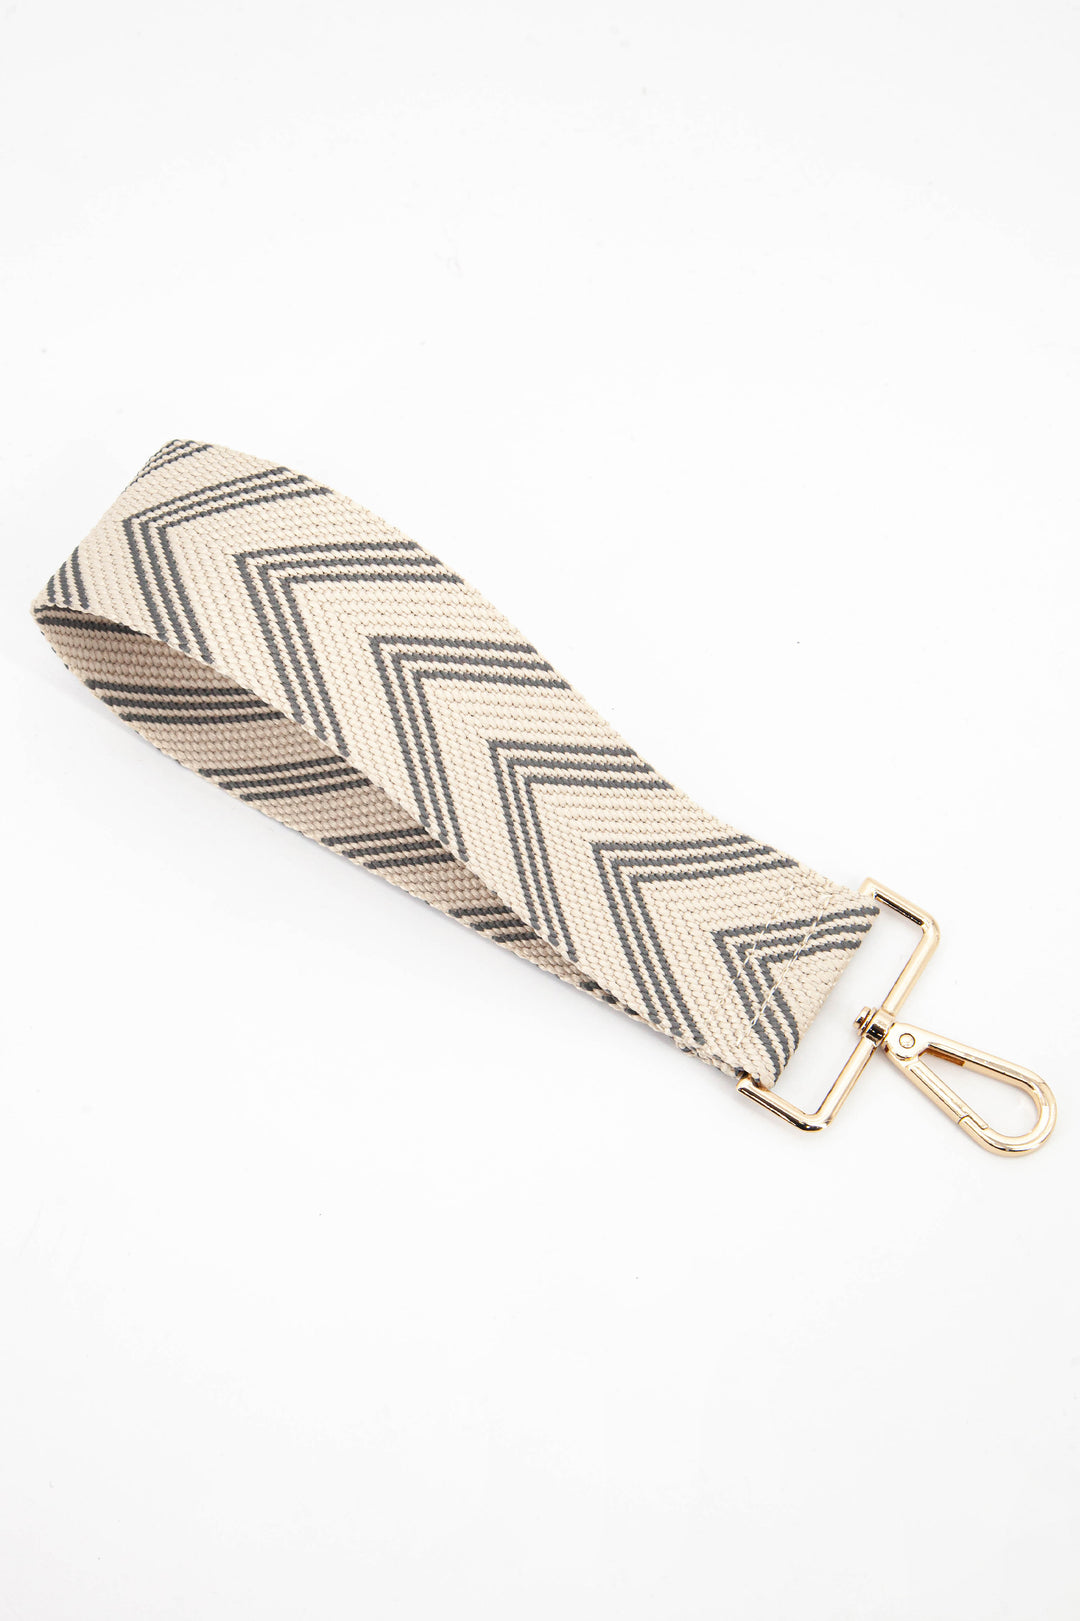 beige and khaki chevron striped woven clip on wrist strap with gold hardware